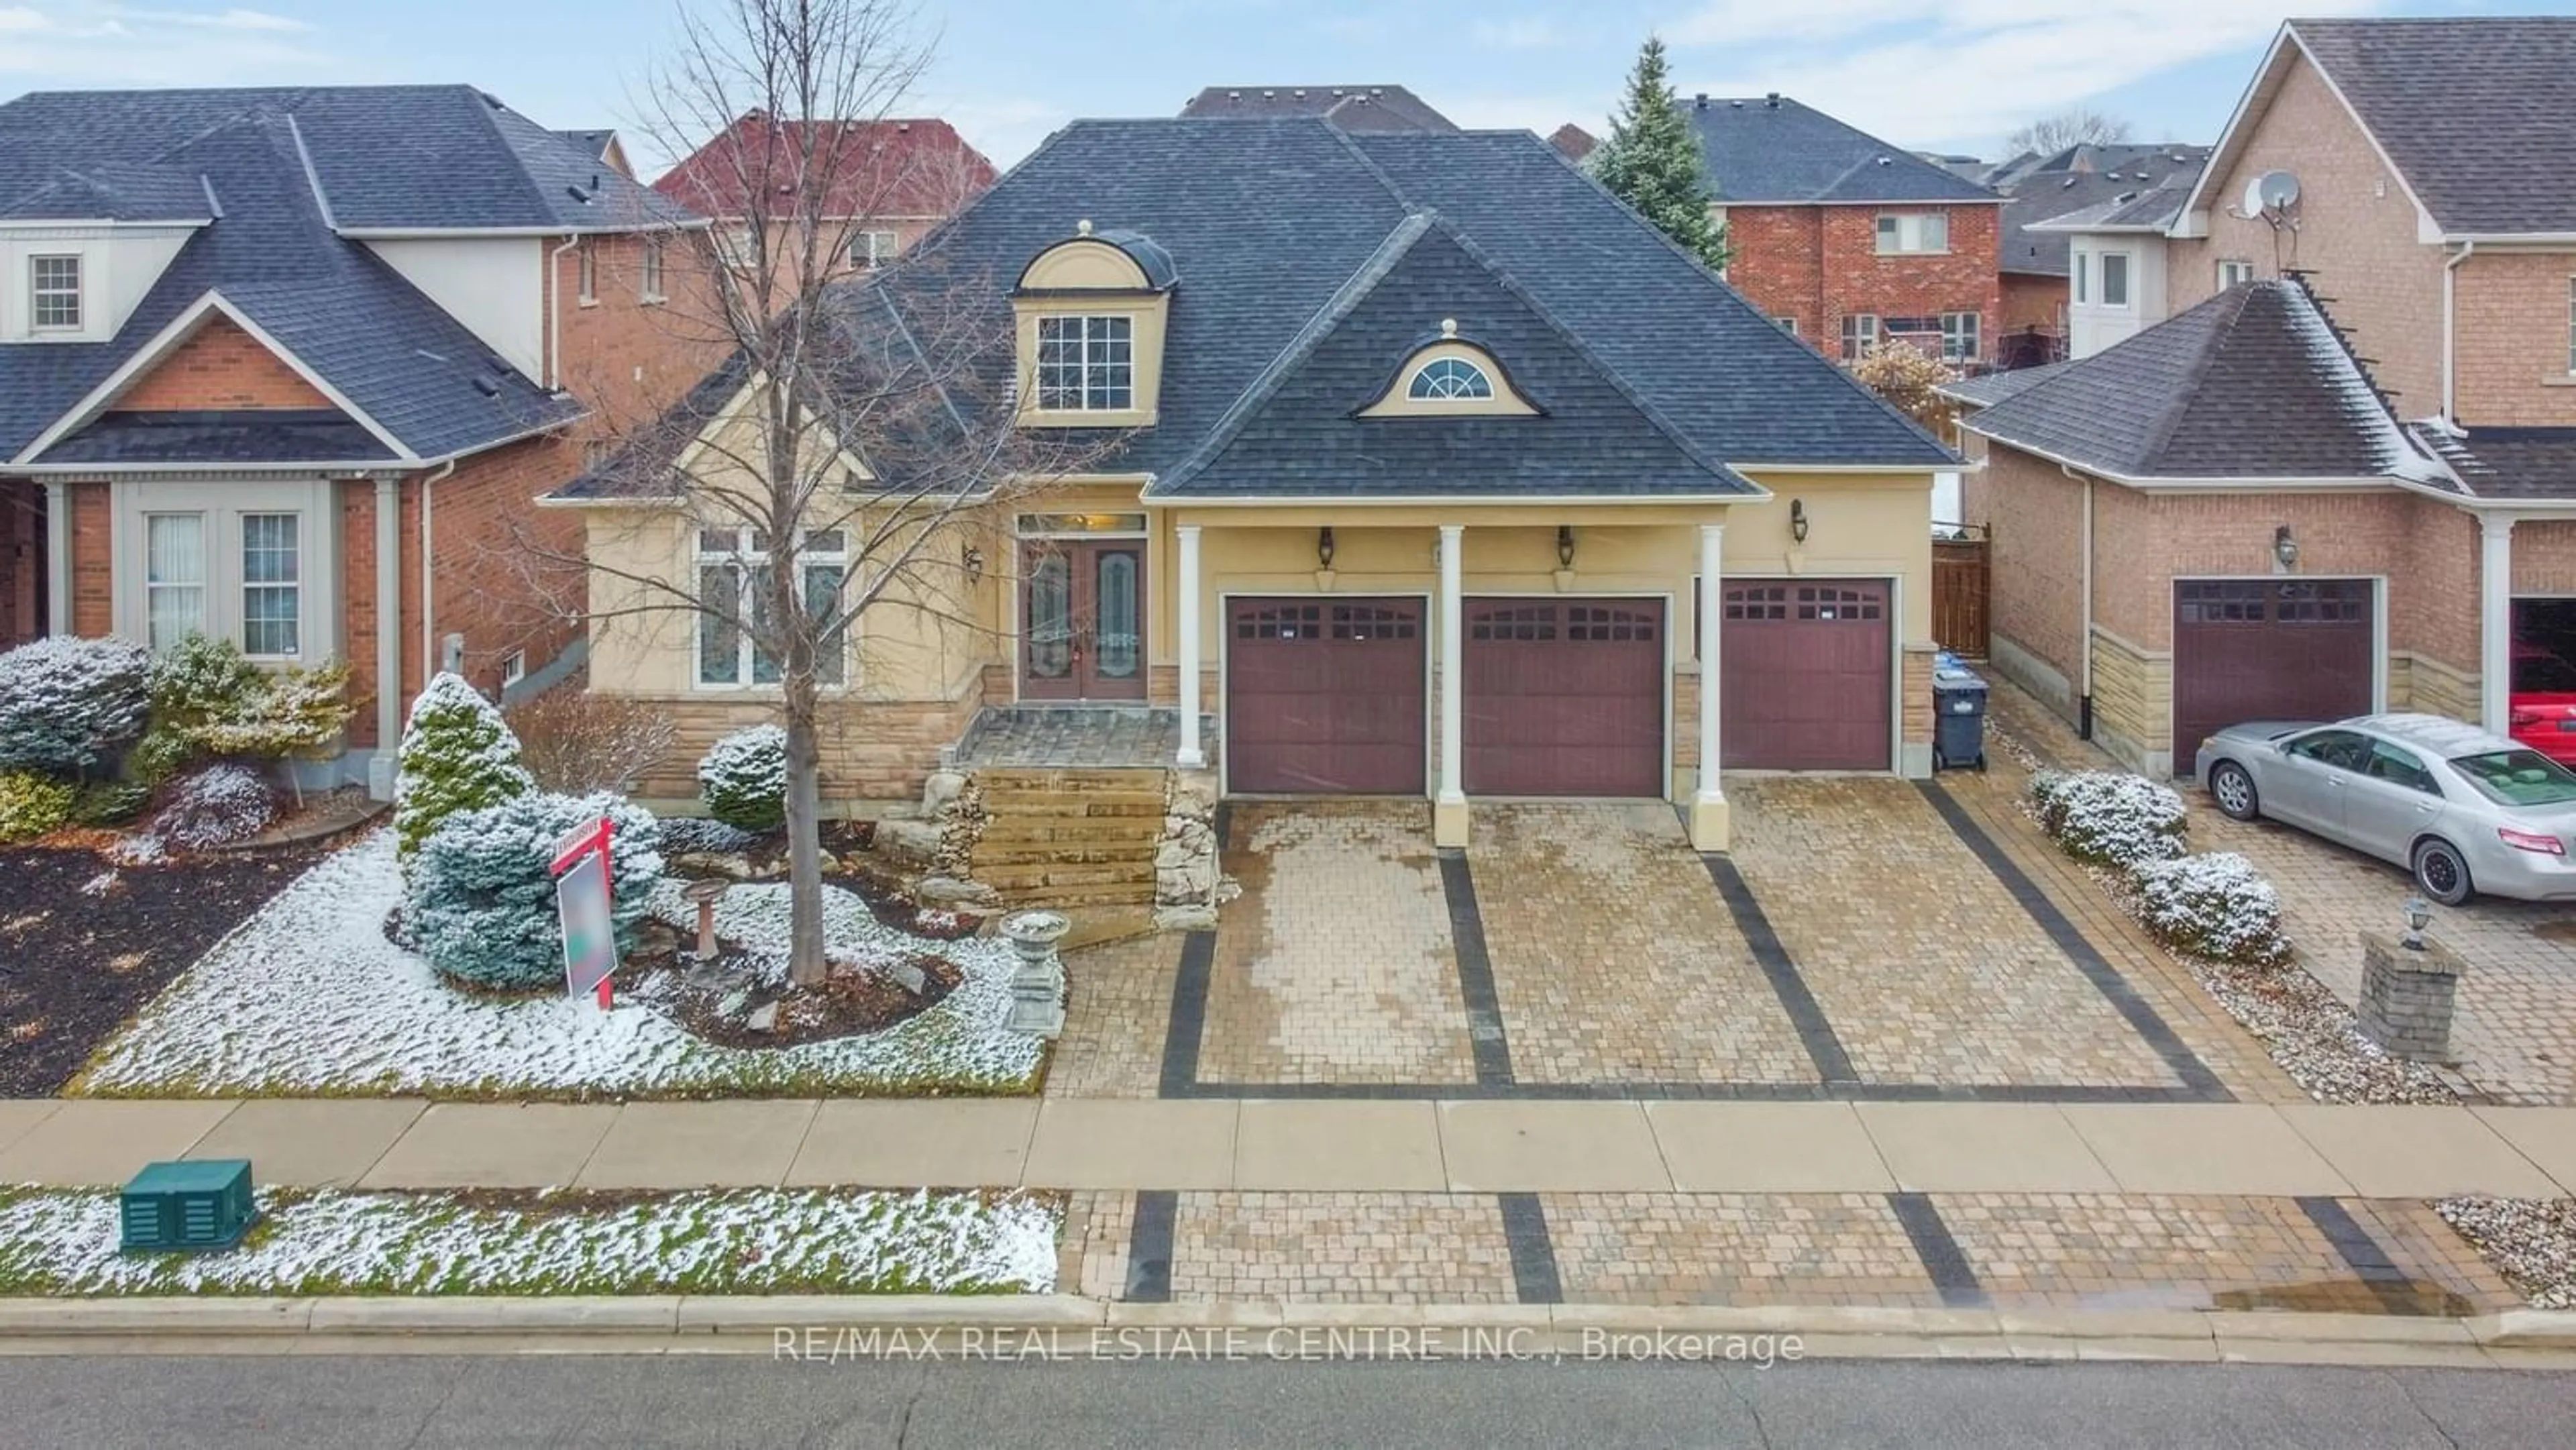 Home with brick exterior material for 10 Eiffel Blvd, Brampton Ontario L6P 1V9